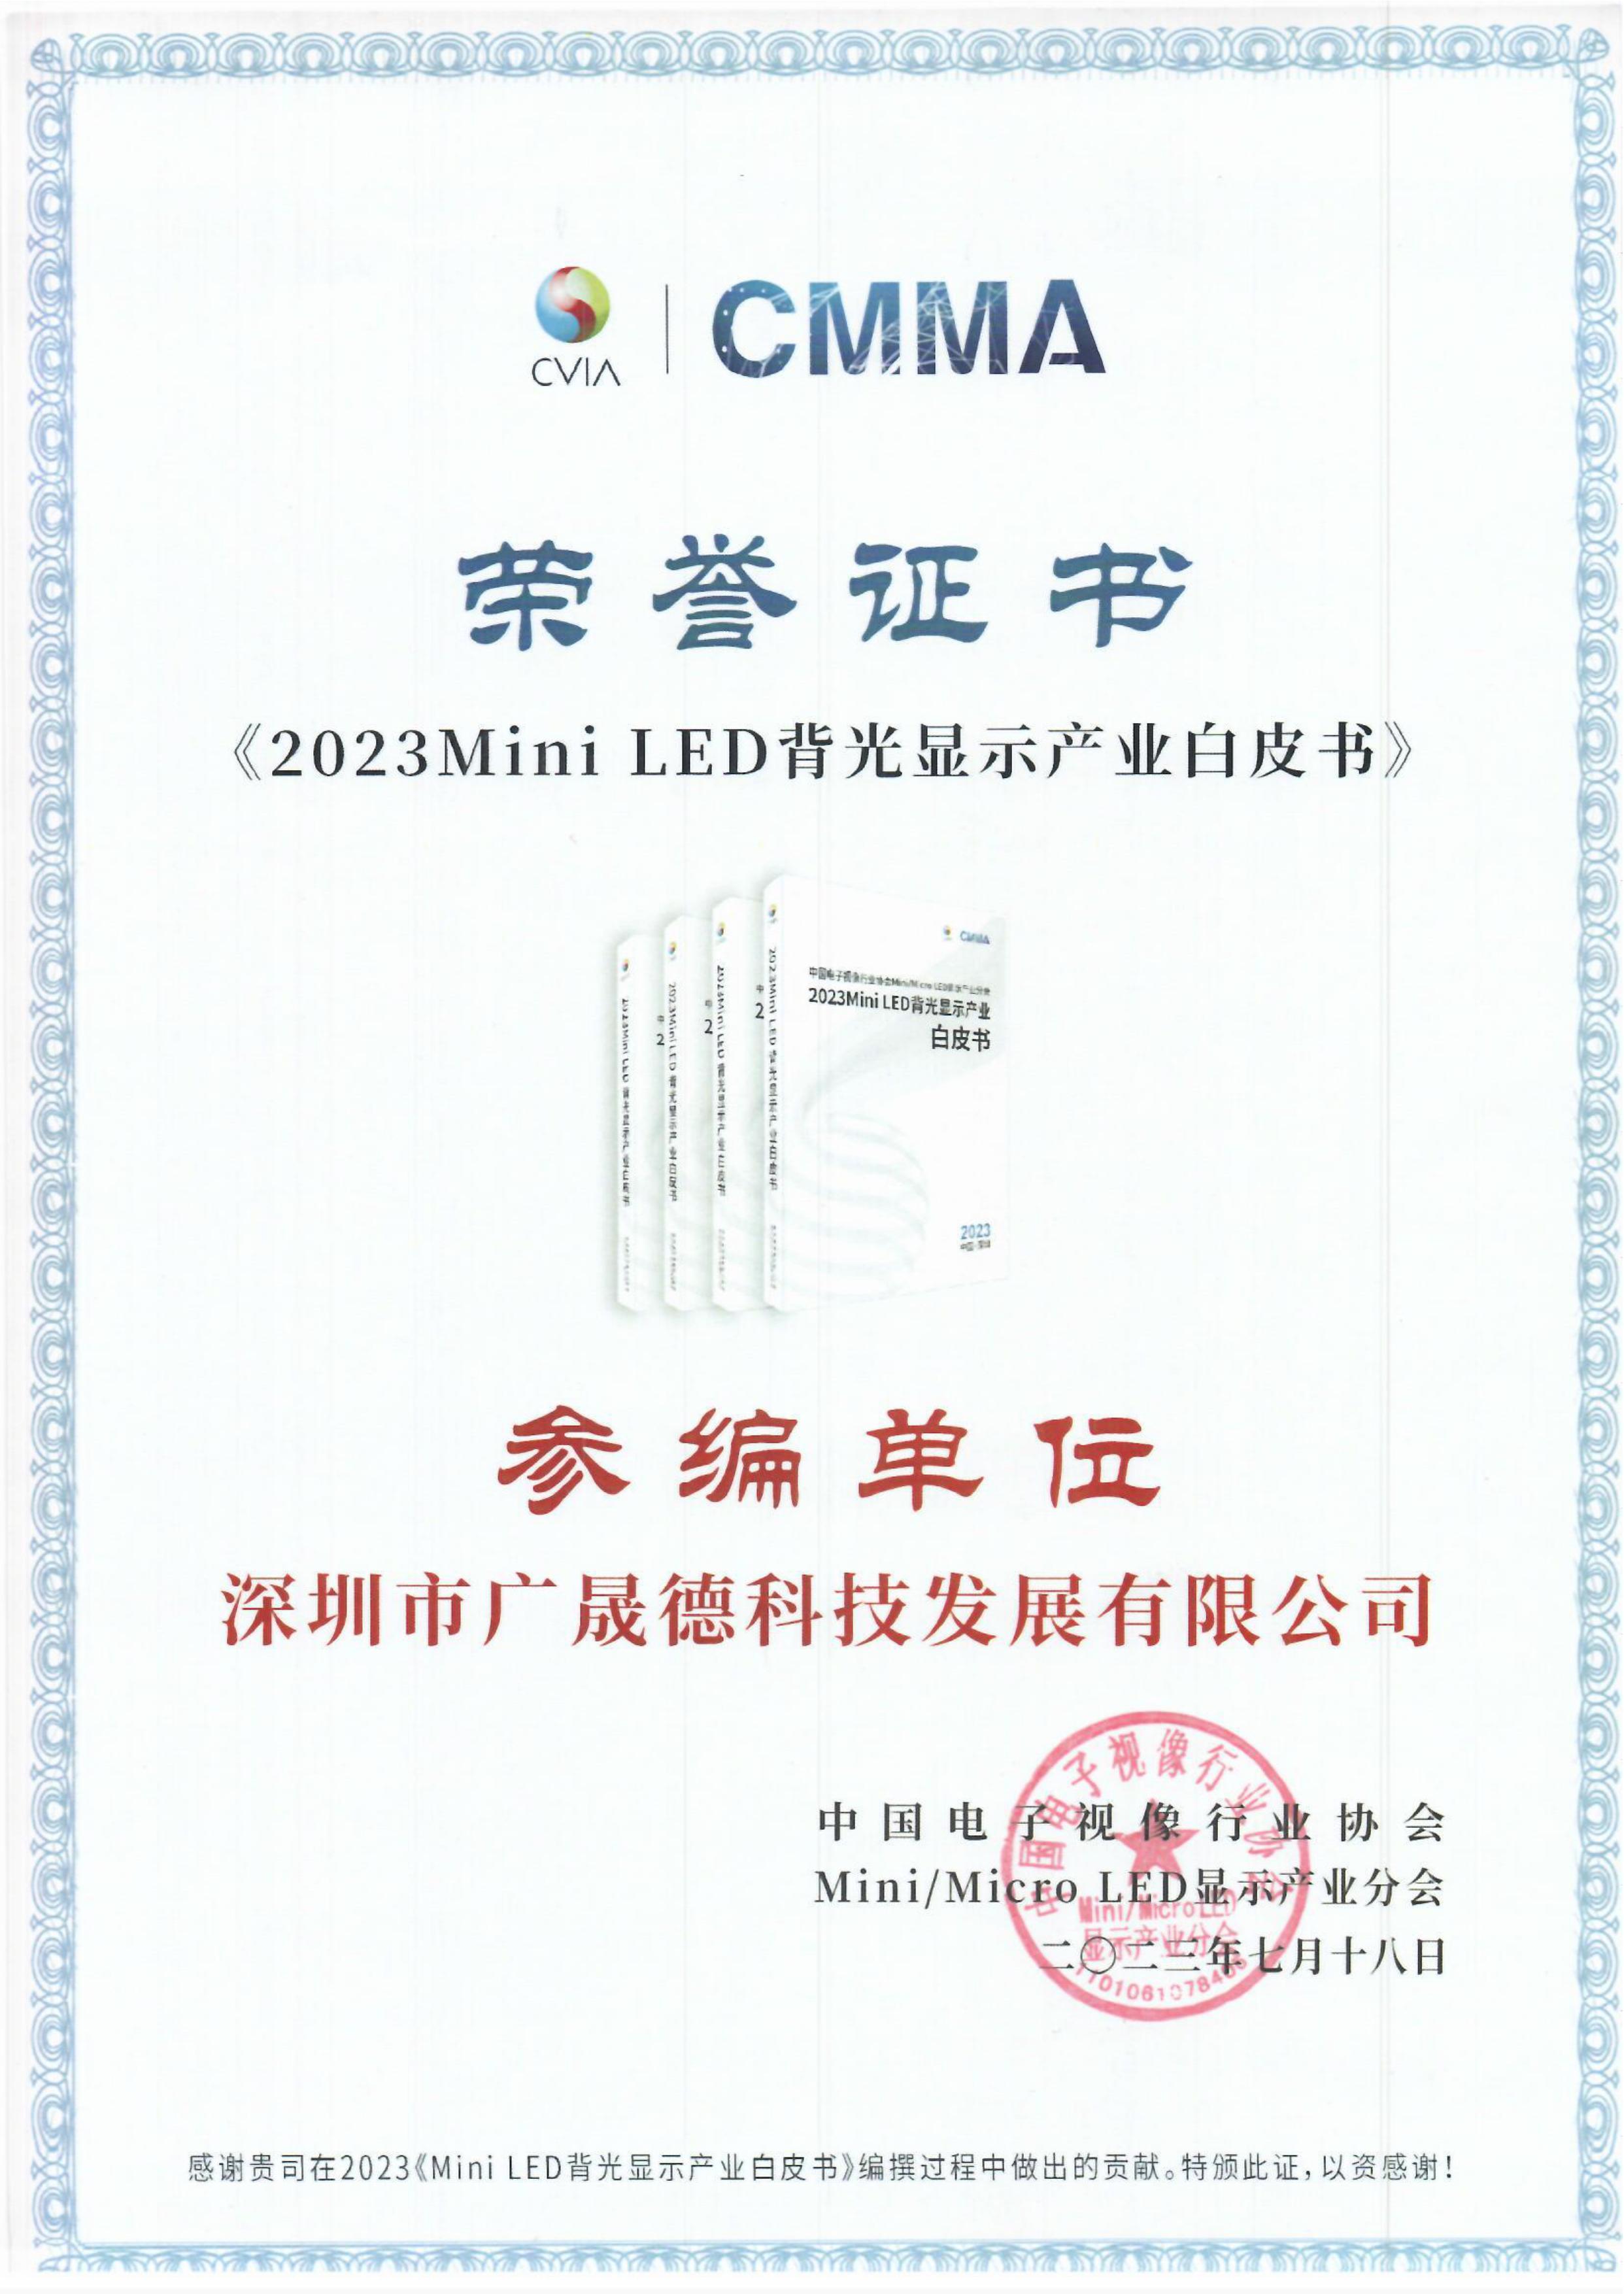 2023Mini LED背光顯示產業白皮書參編單位證書